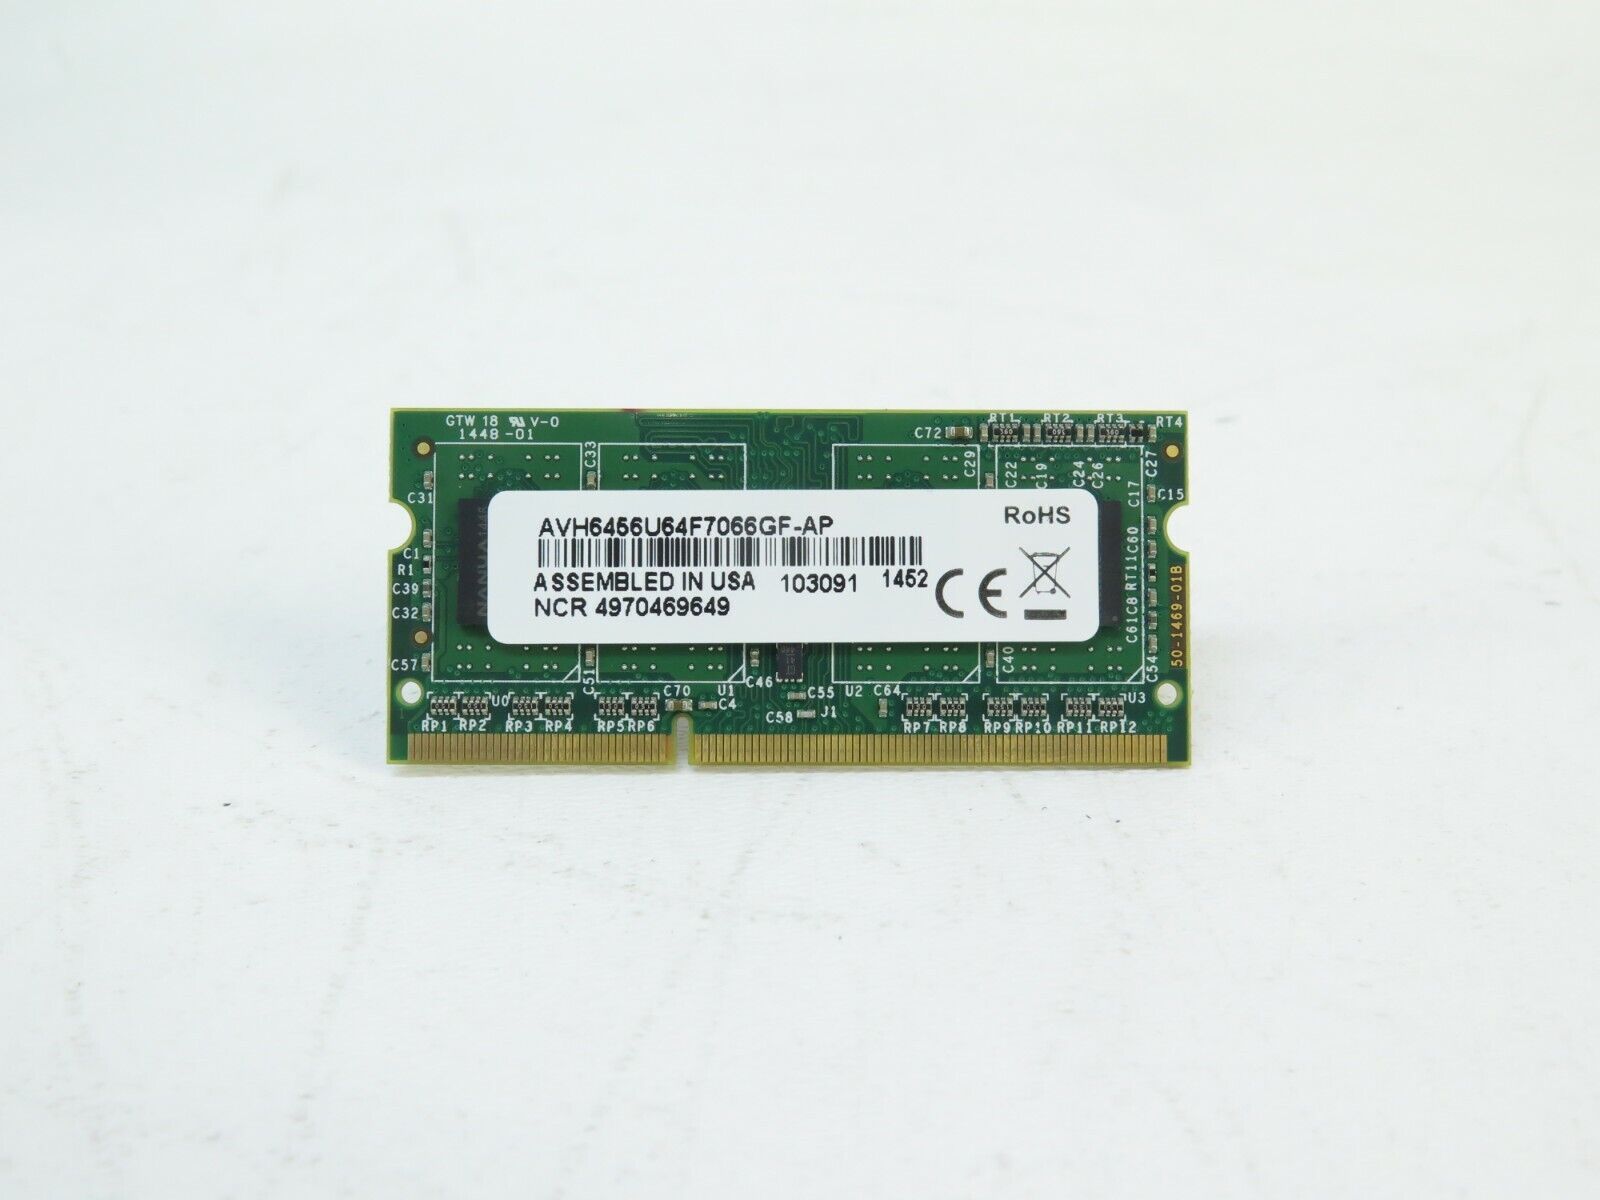 NCR Avant Tech 1 x 2GB - SODIMM DDR3 MEMORY AVH6456U64F7066GF-AP PC3-1066 